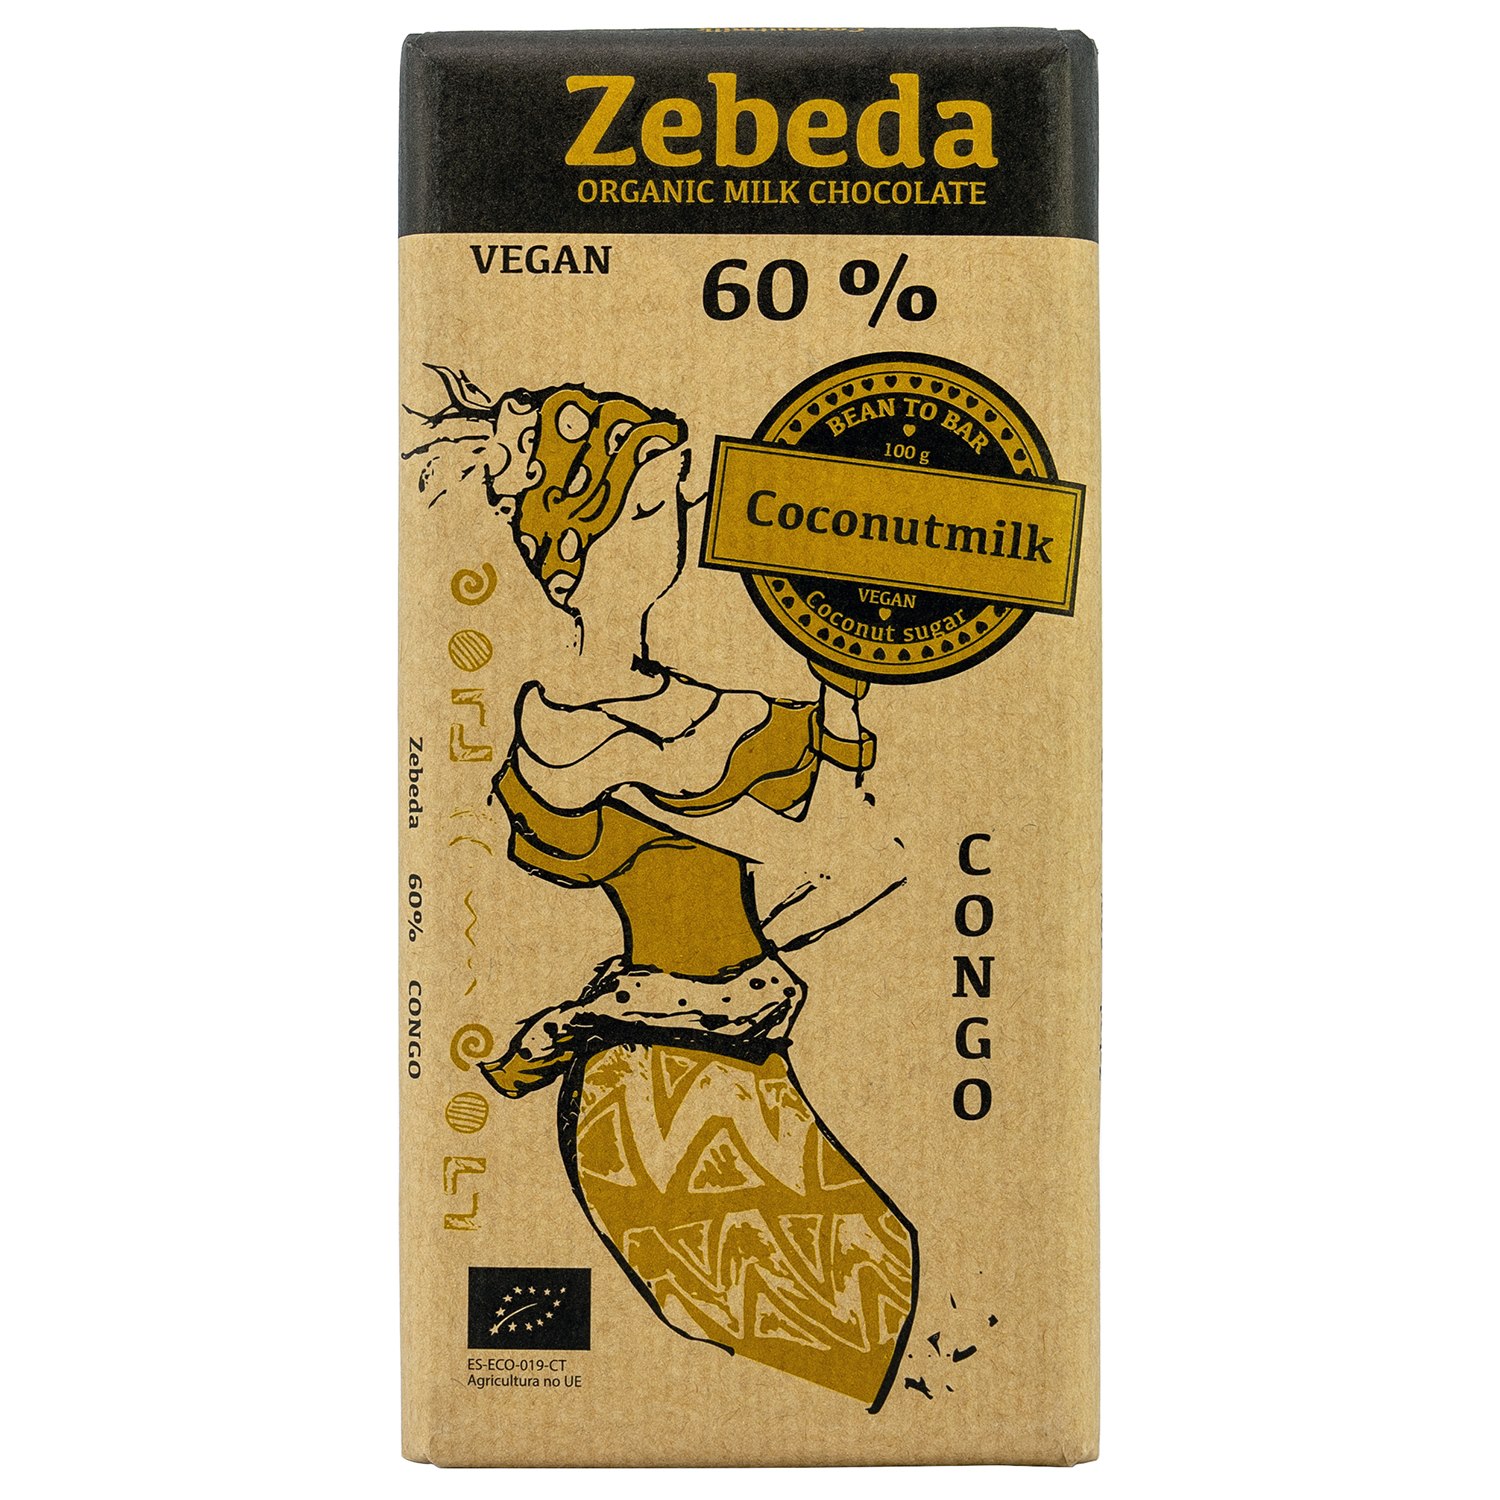 Zebeda Chocolate Ekologisk Mjölkchoklad 60% med Kokosmjölk, 100 g